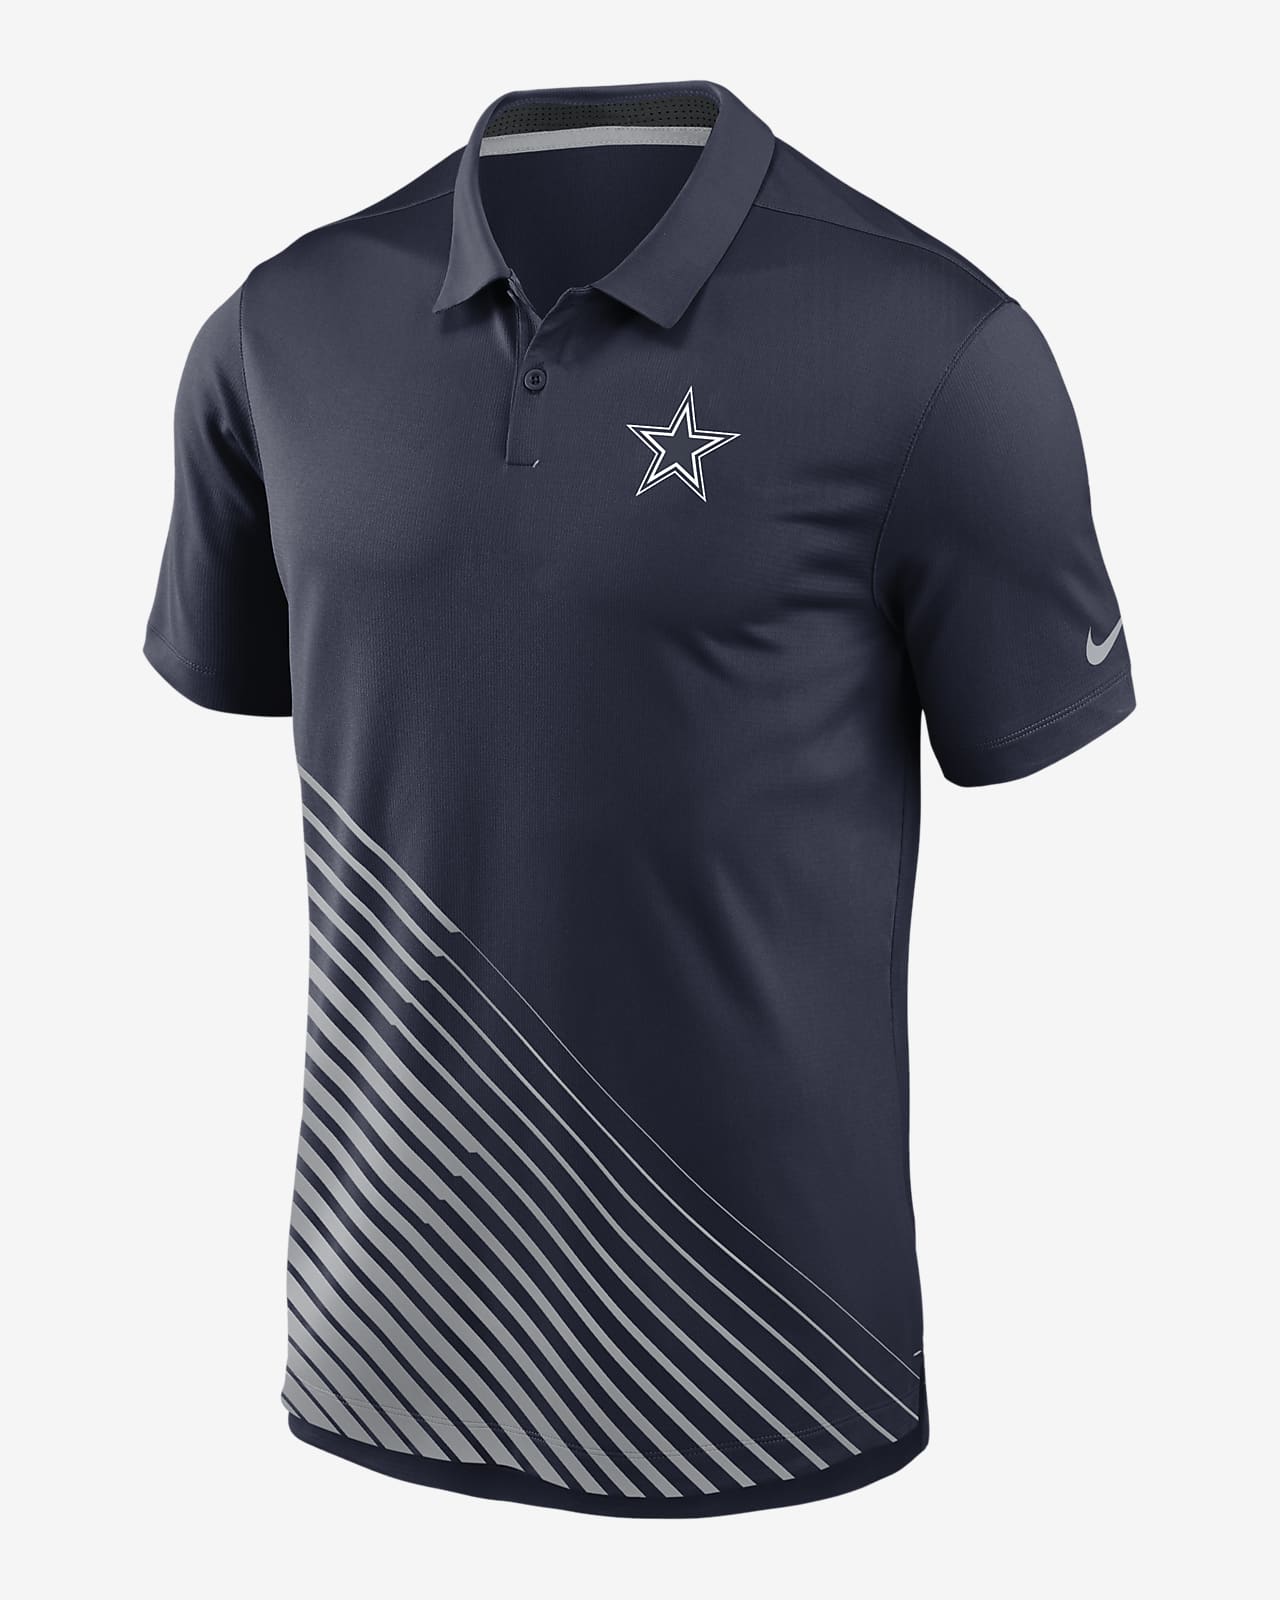 Nike Dri-FIT Yard Line (NFL Dallas Cowboys) Men's Polo